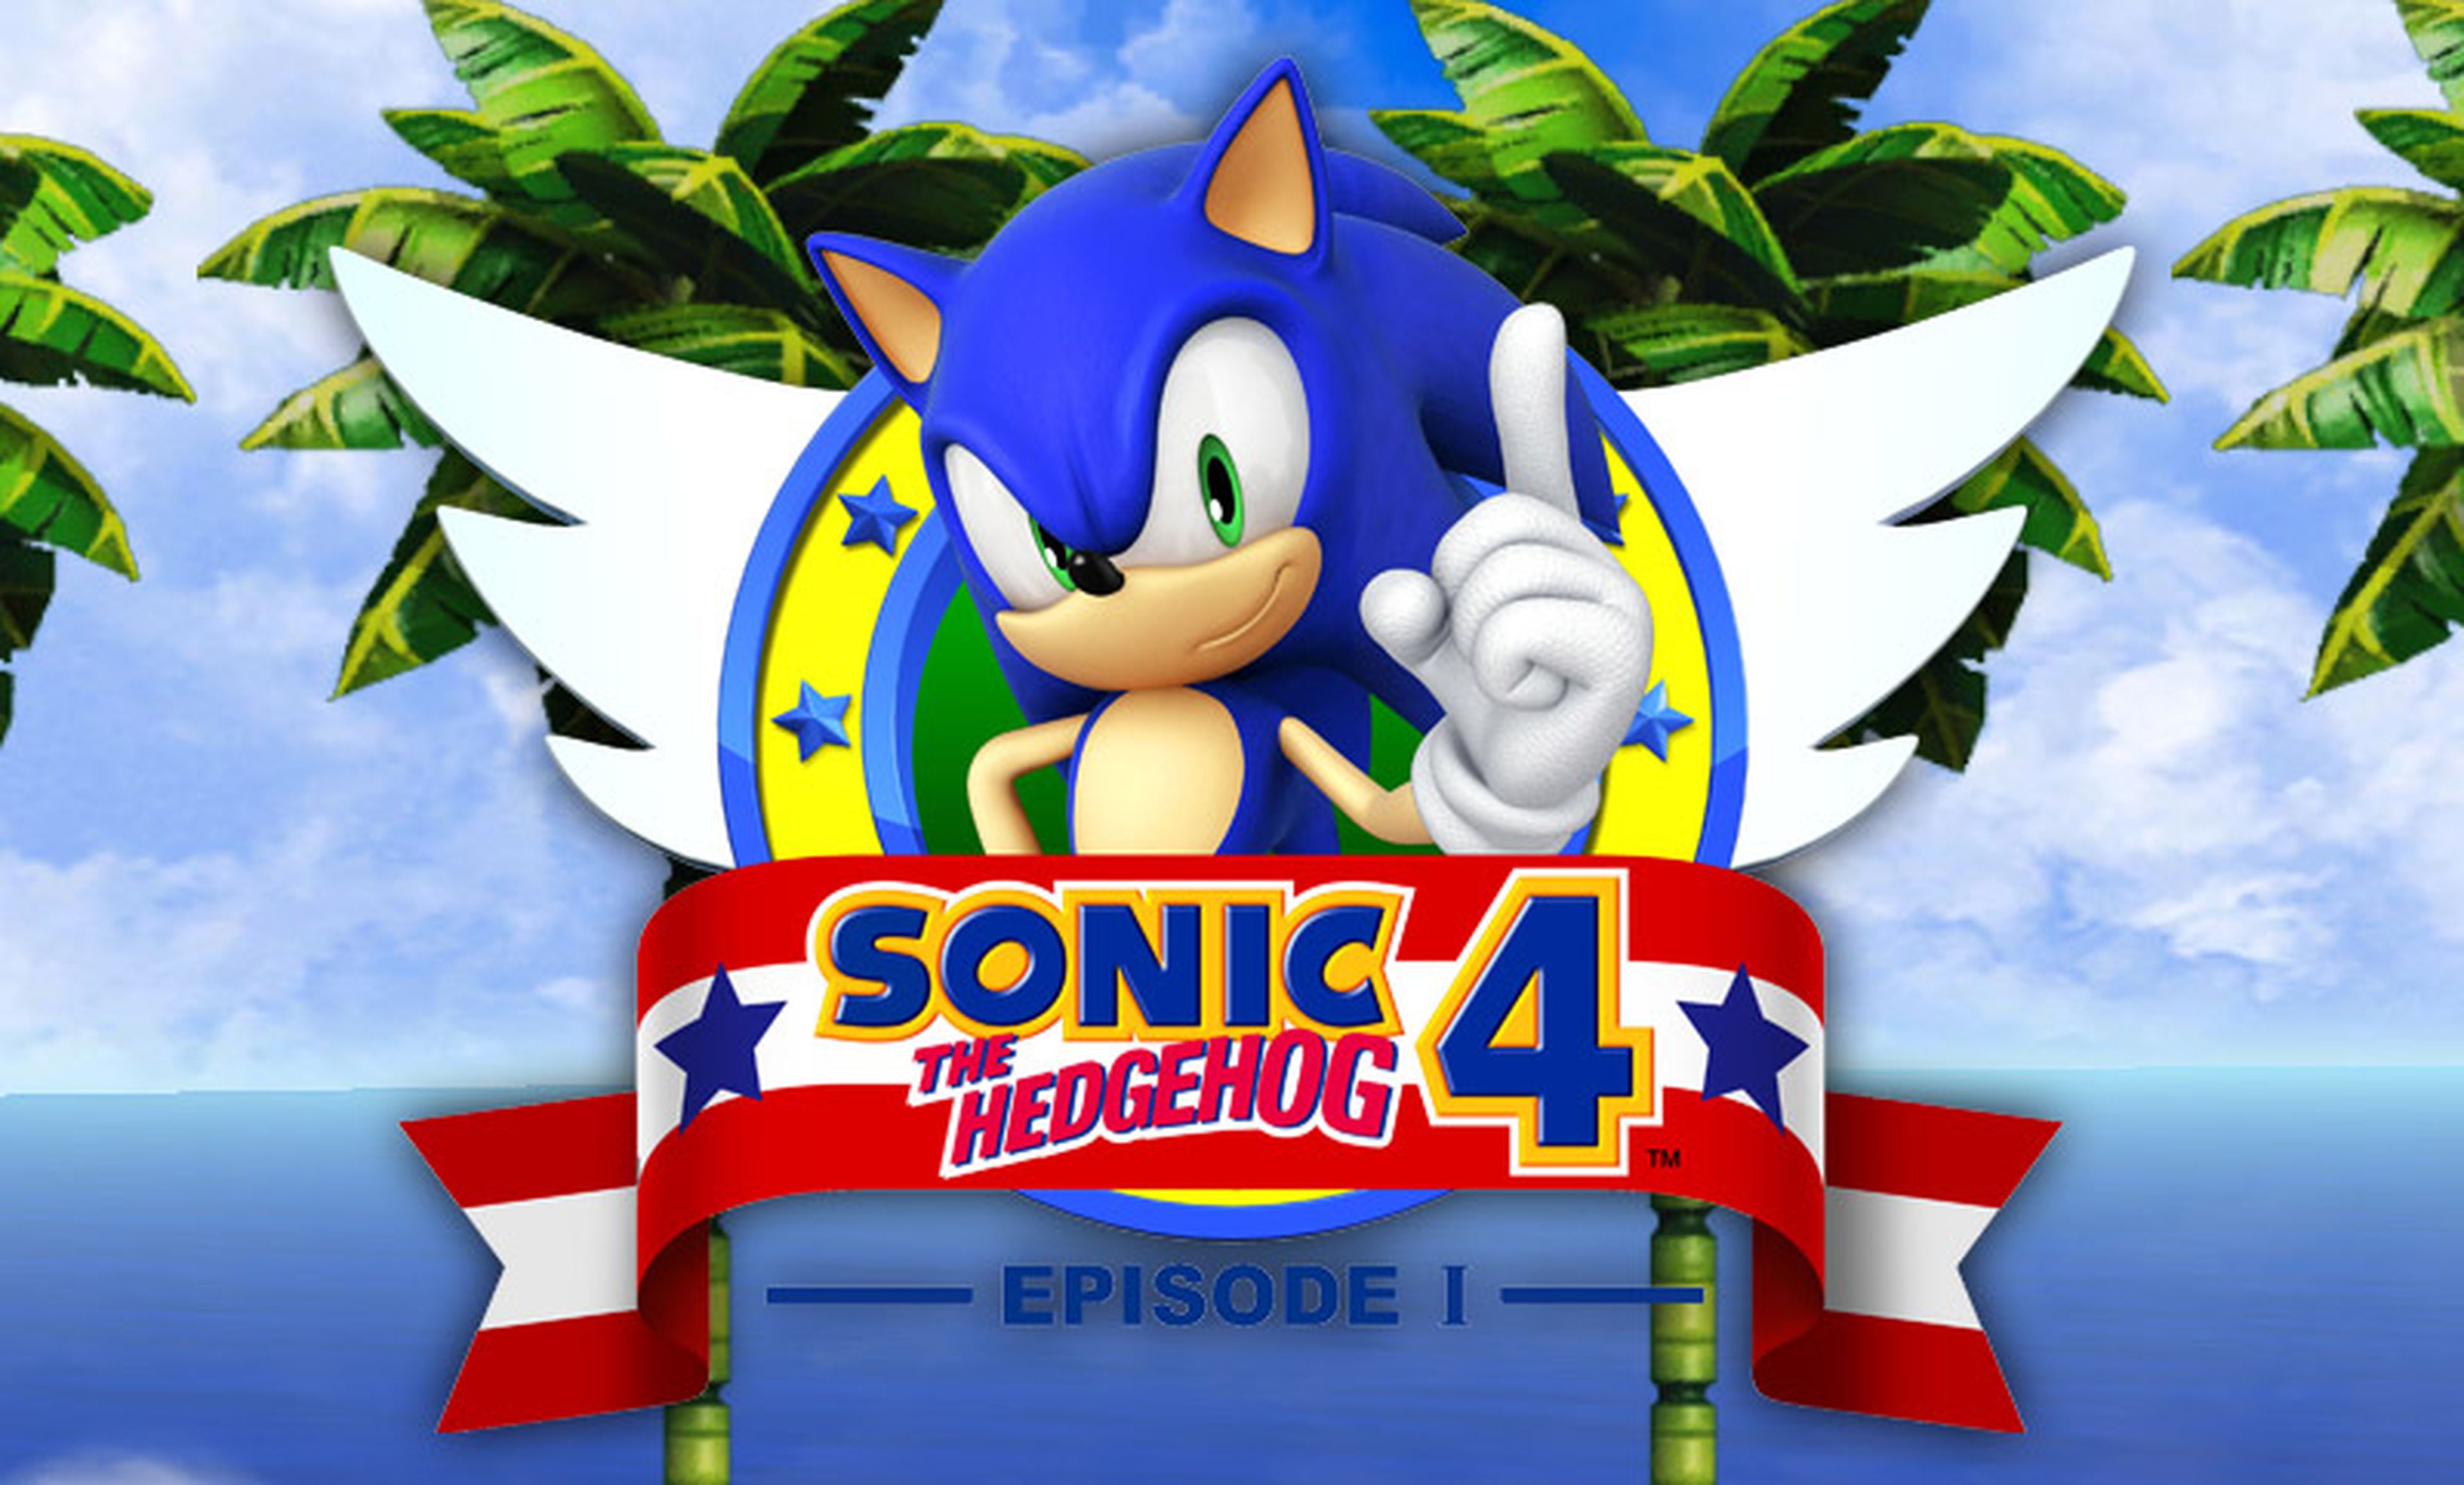 Sonic 4 Episodio 1, primero en iTunes